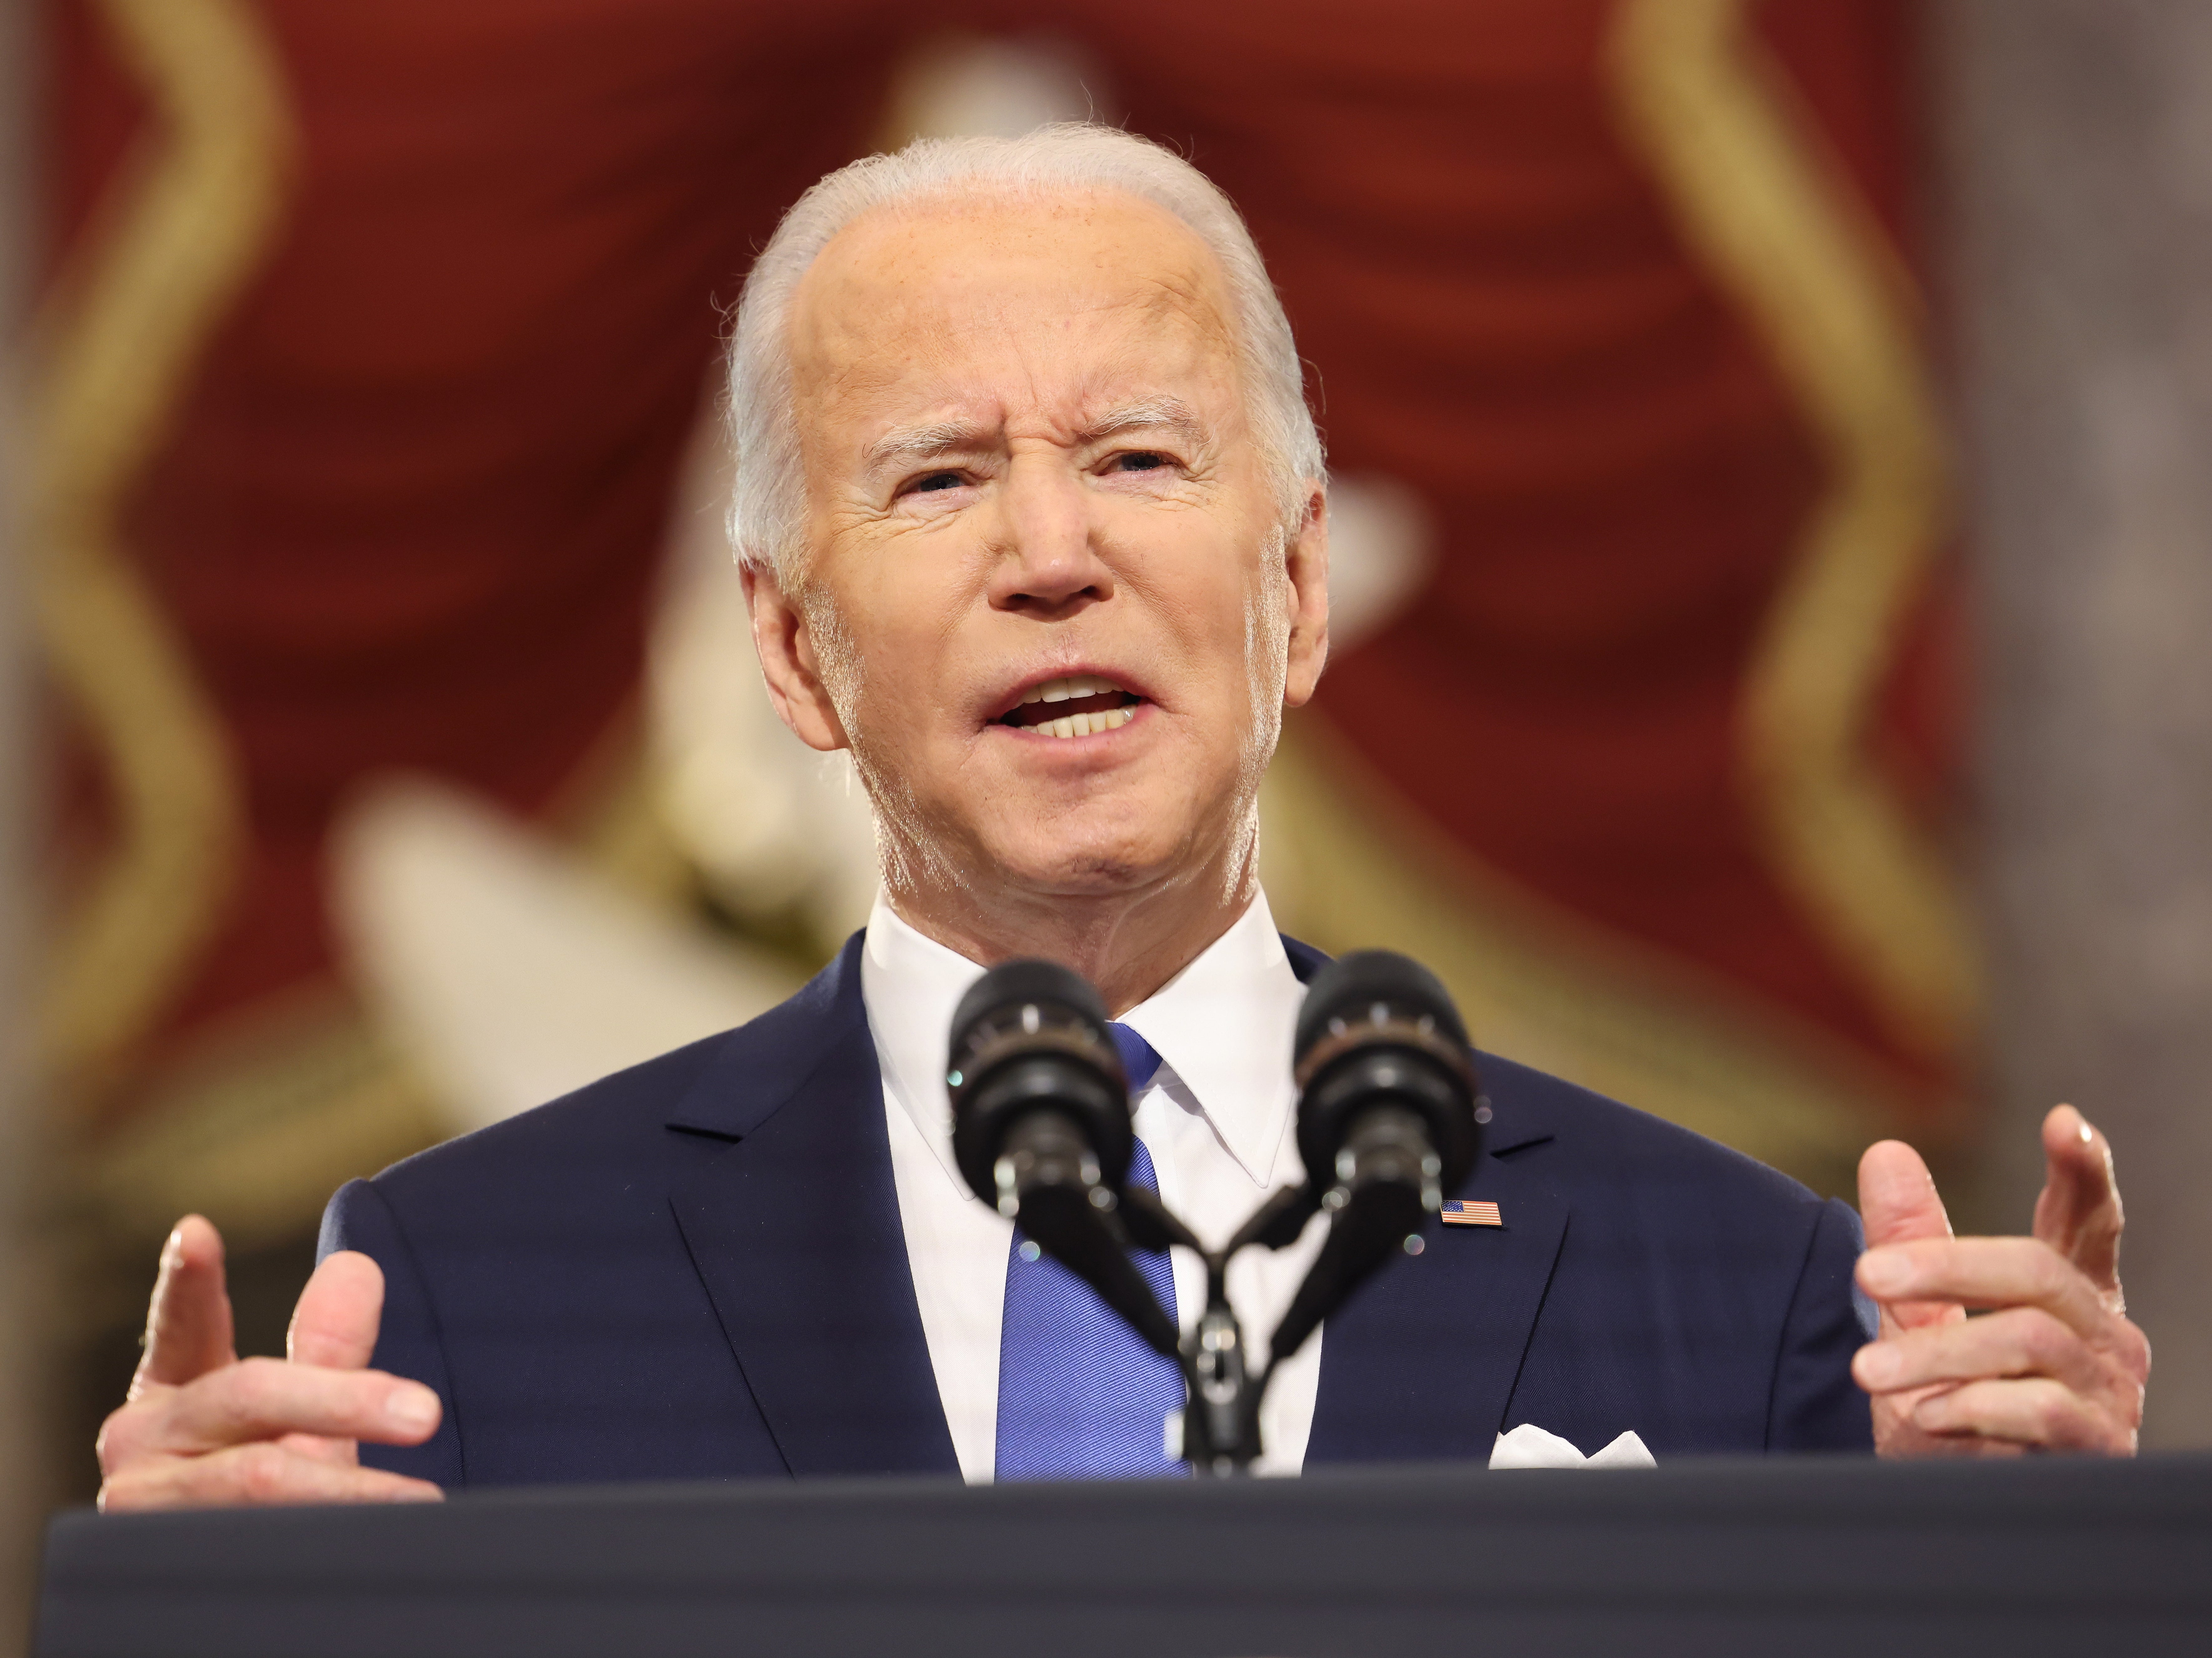 Joe Biden speaks in the US Capitol’s Statuary Hall